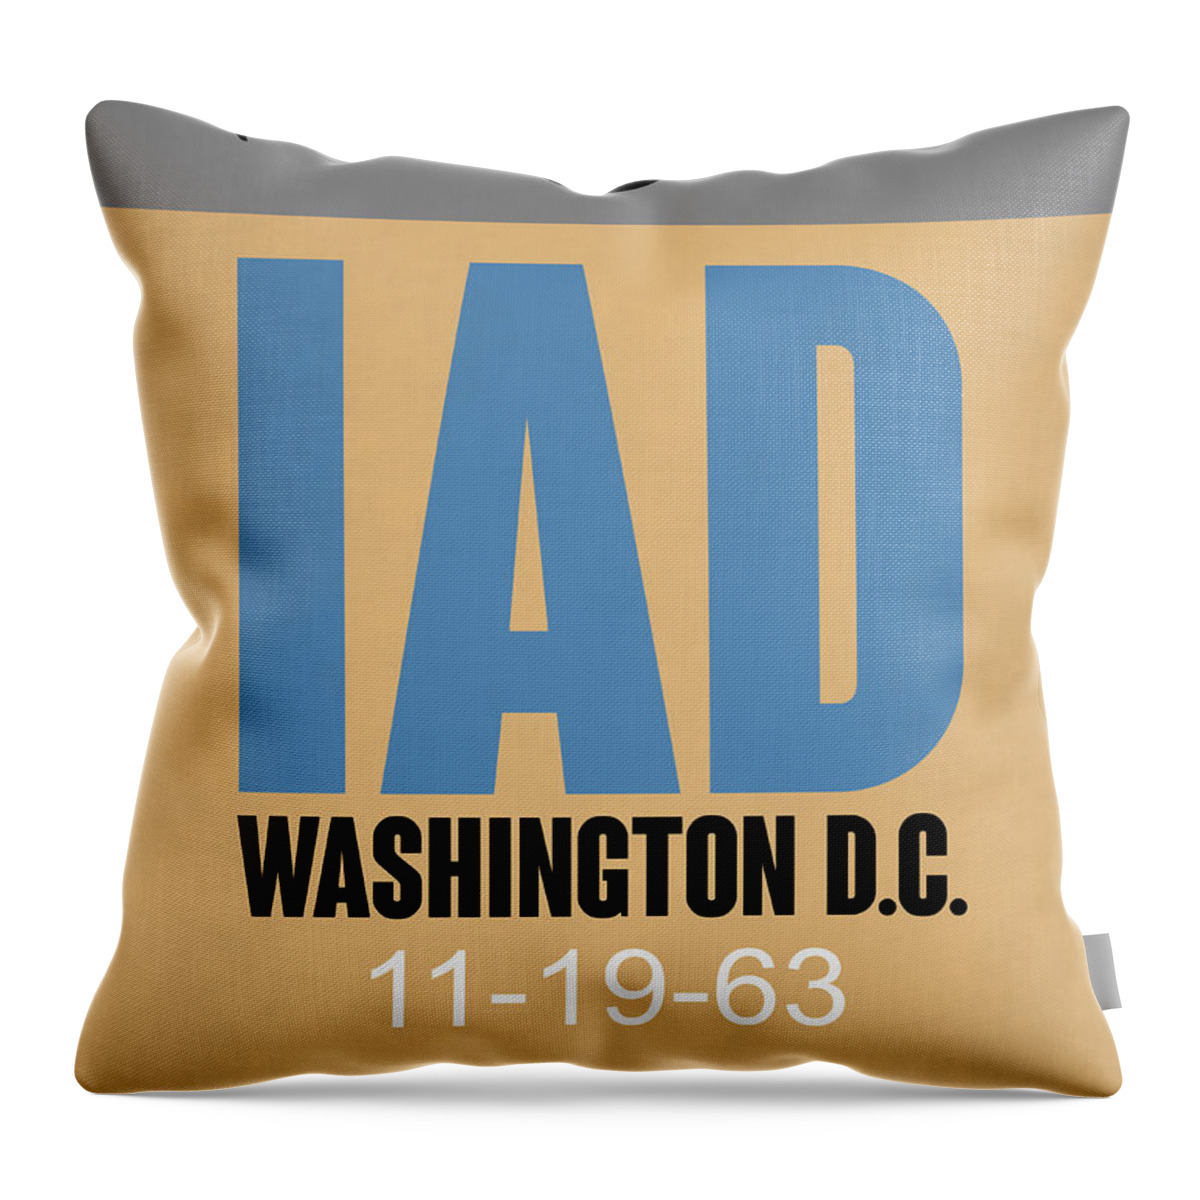 Washington D.c. Throw Pillow featuring the digital art Washington D.C. Airport Poster 3 by Naxart Studio